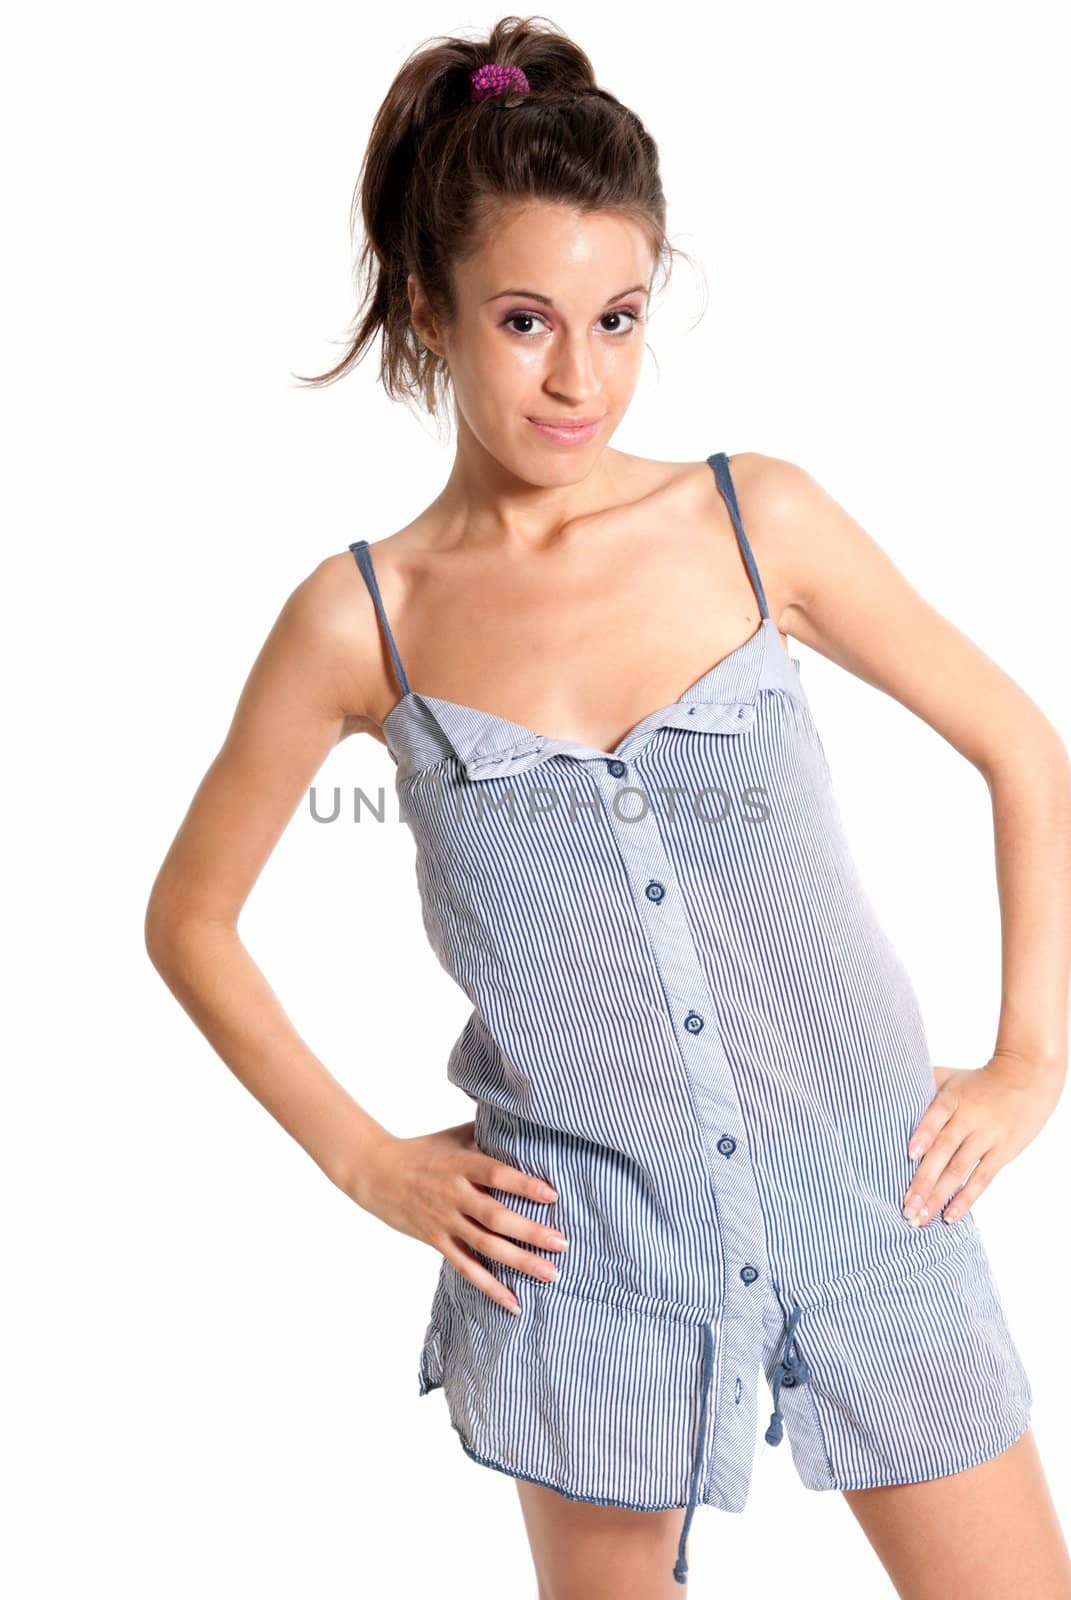 young female wearing pajamas happy isolated on white background